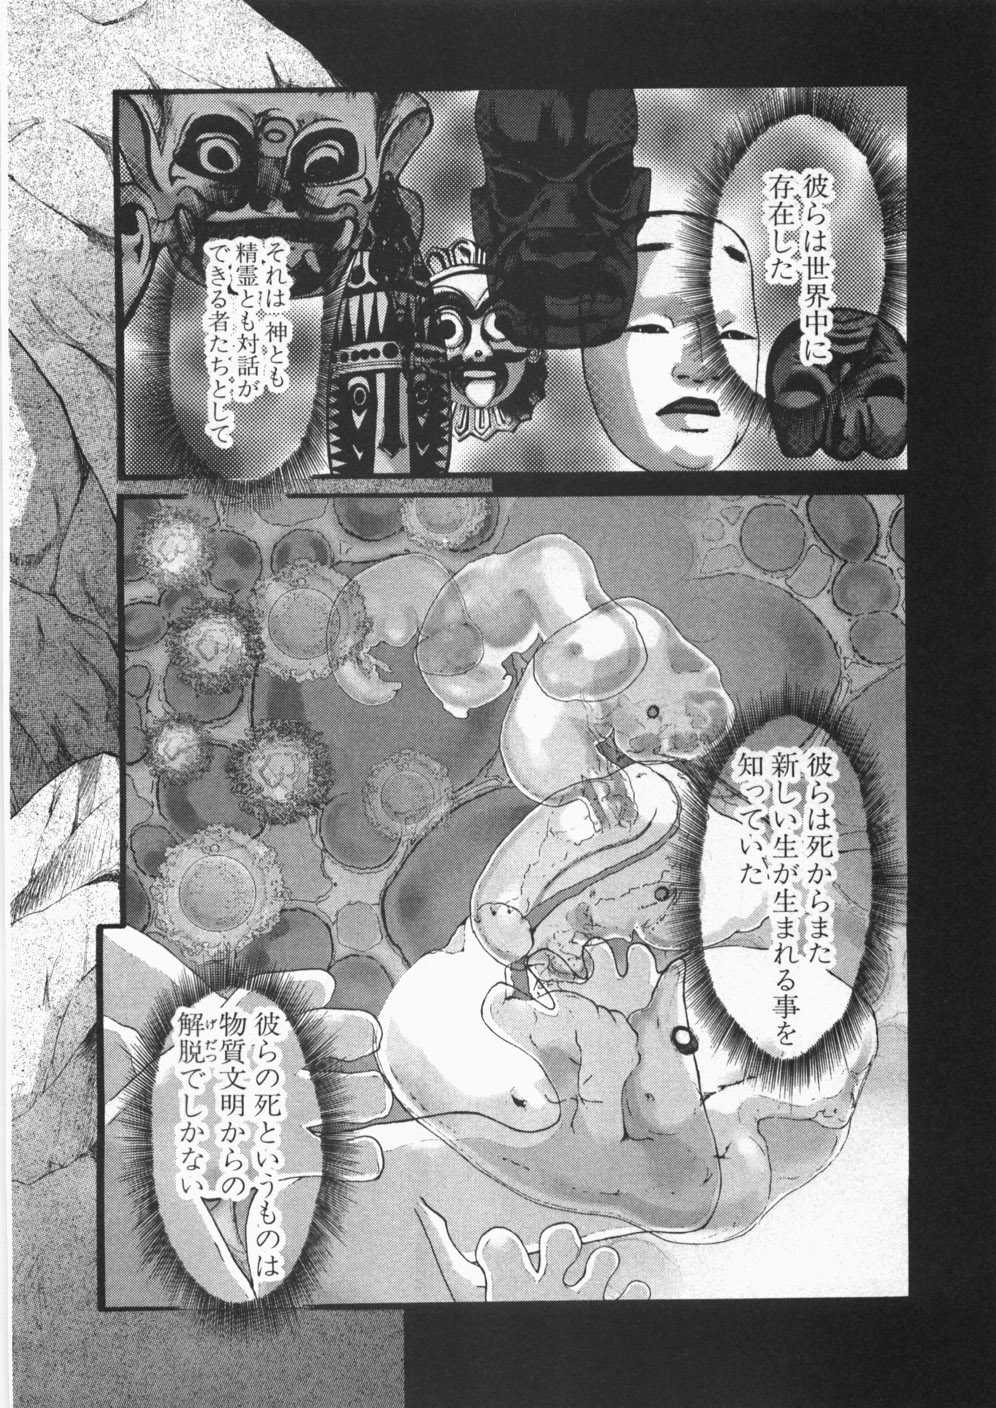 [Satoru Akahori &amp; Hiroshi Itaba] M&Oslash;USE Vol.12 